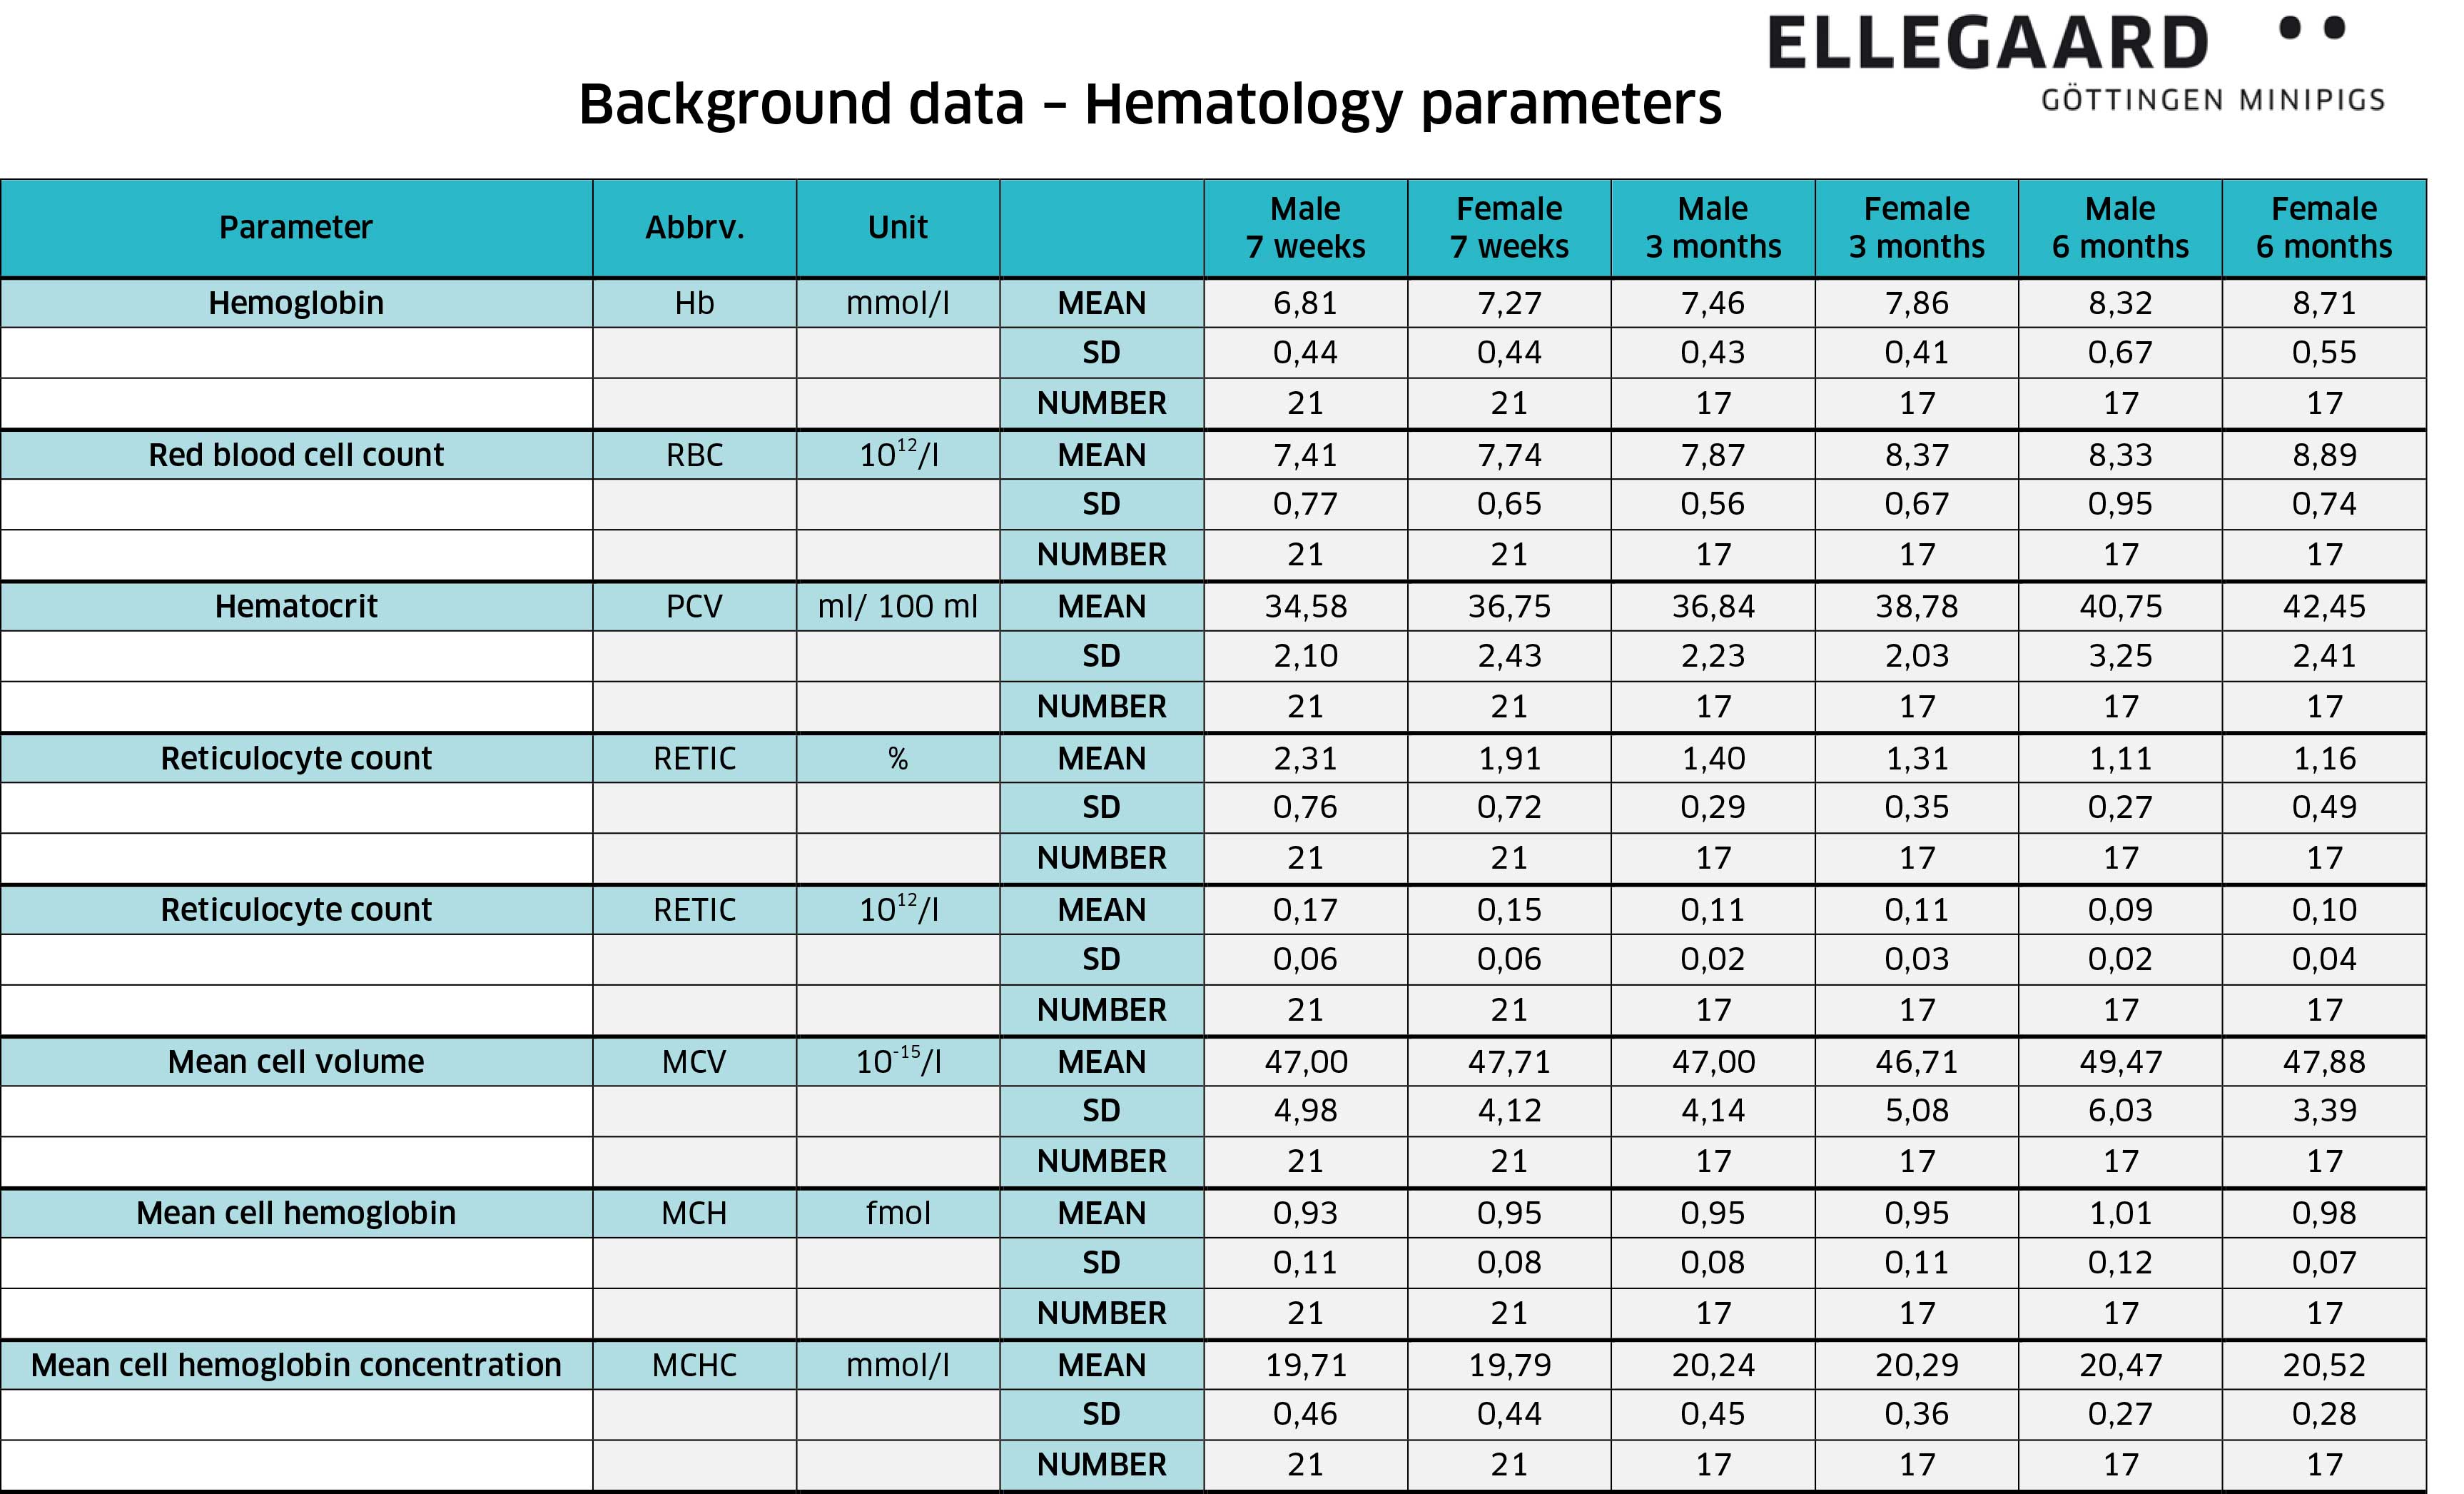 Hematology: Background Data